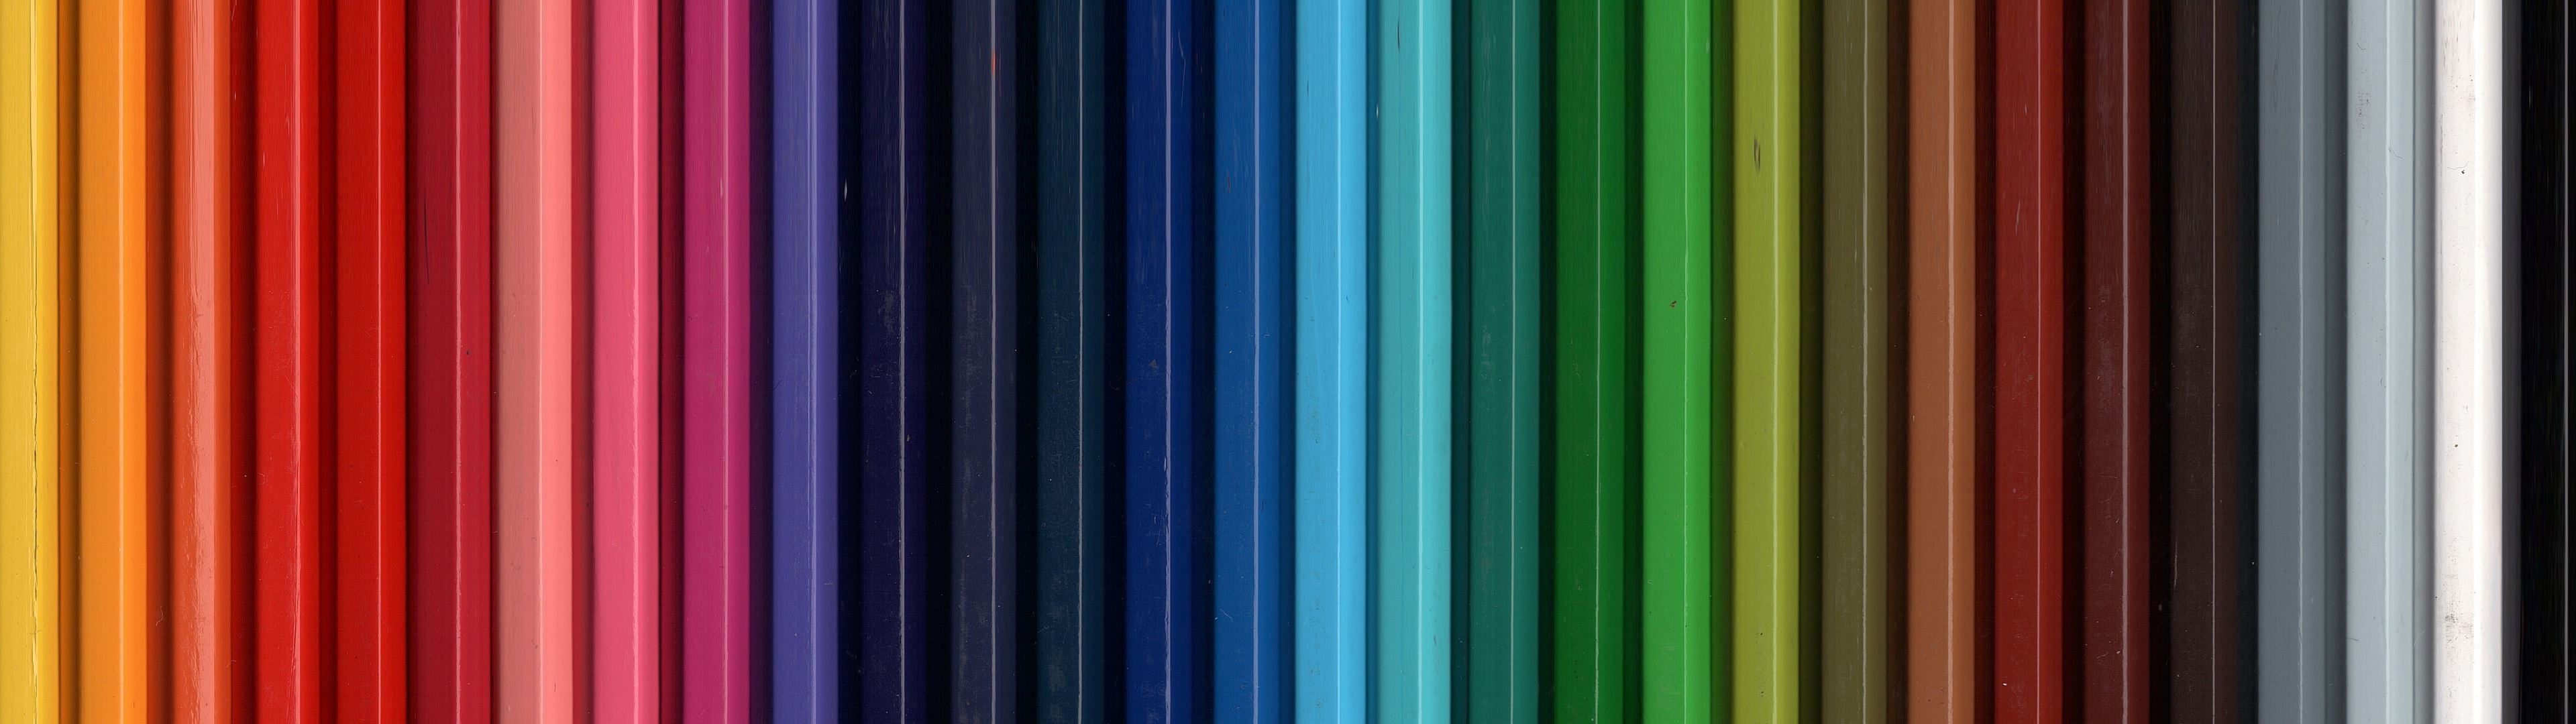 SMPTE color bar, multiple display, pencils